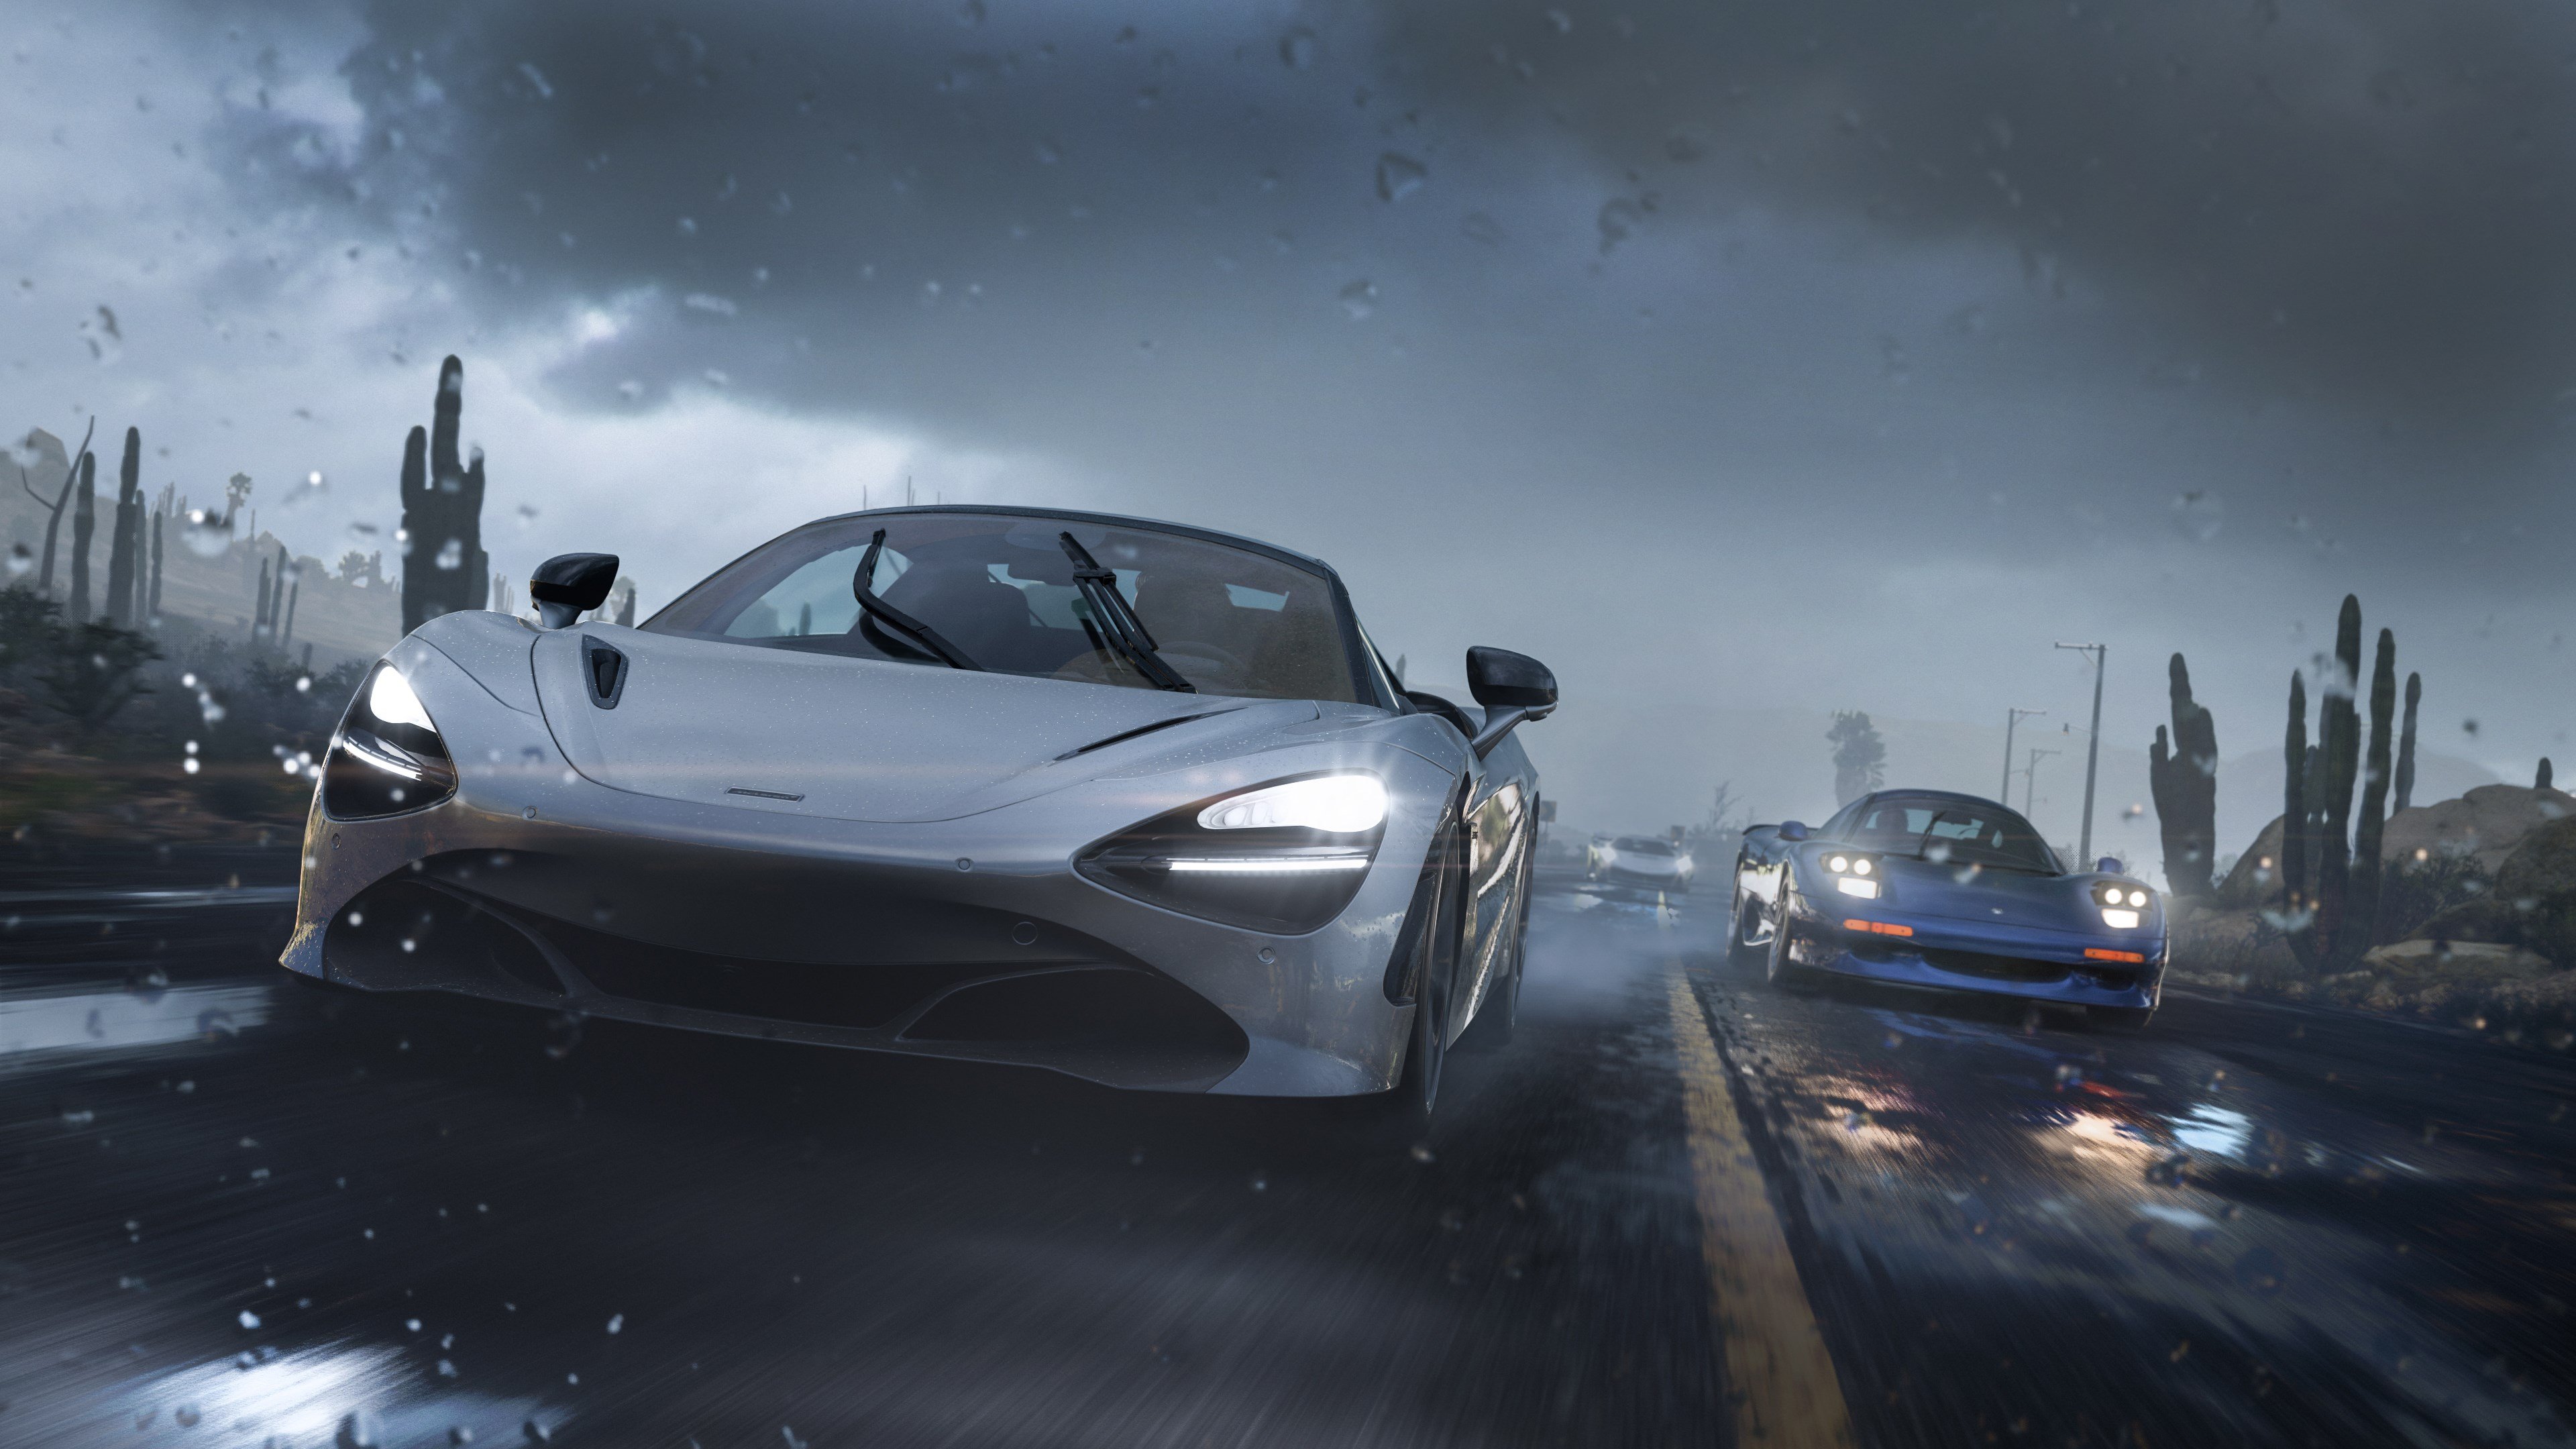 McLaren Raining Night 4K Car Live Wallpaper